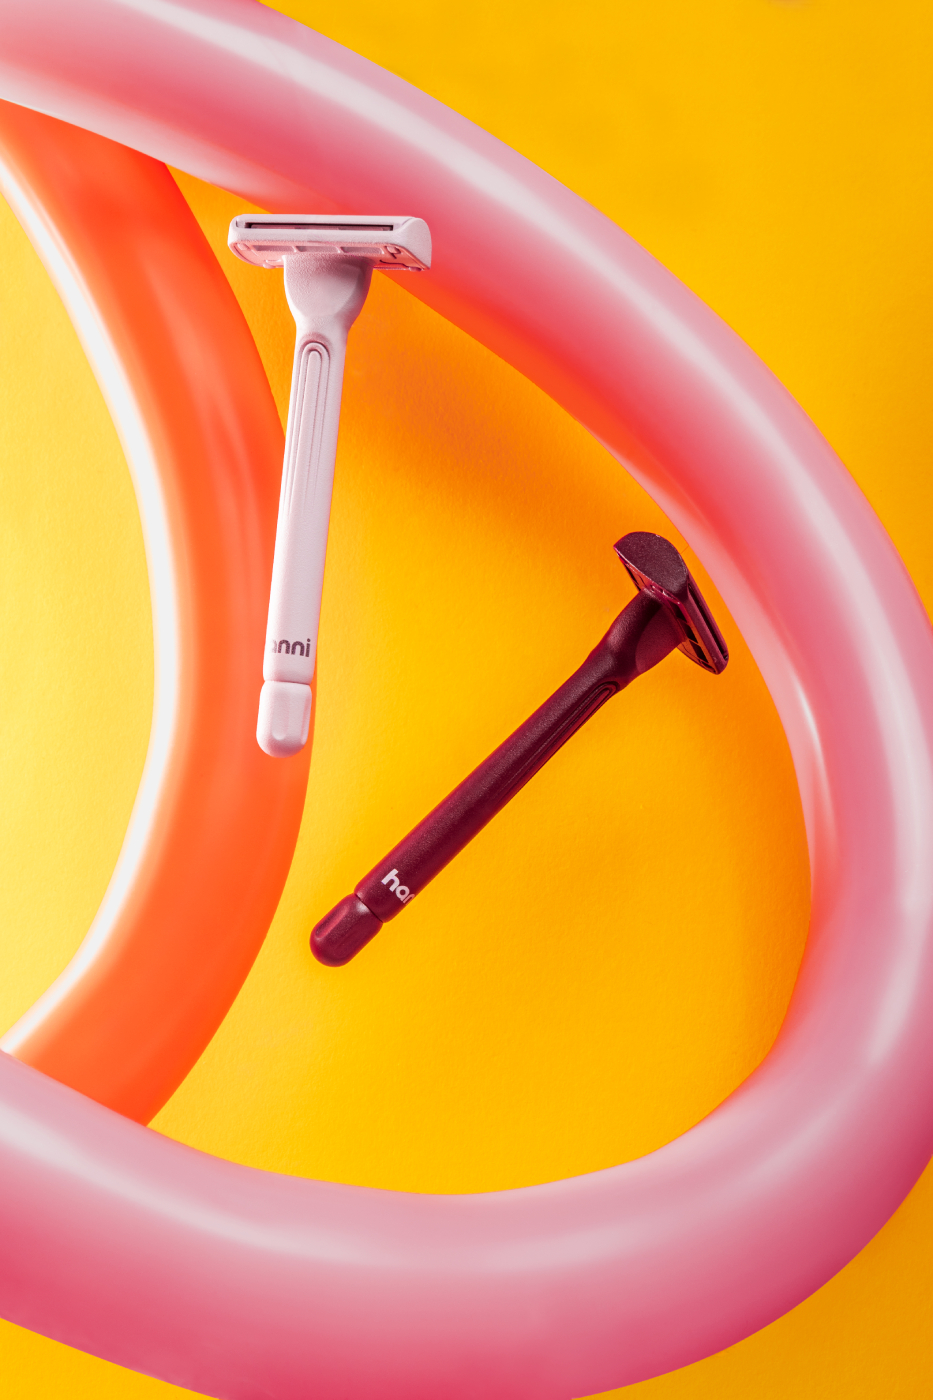 Two Hanni razors shaving long the curve of an animal balloon shot by Katelin Kinney